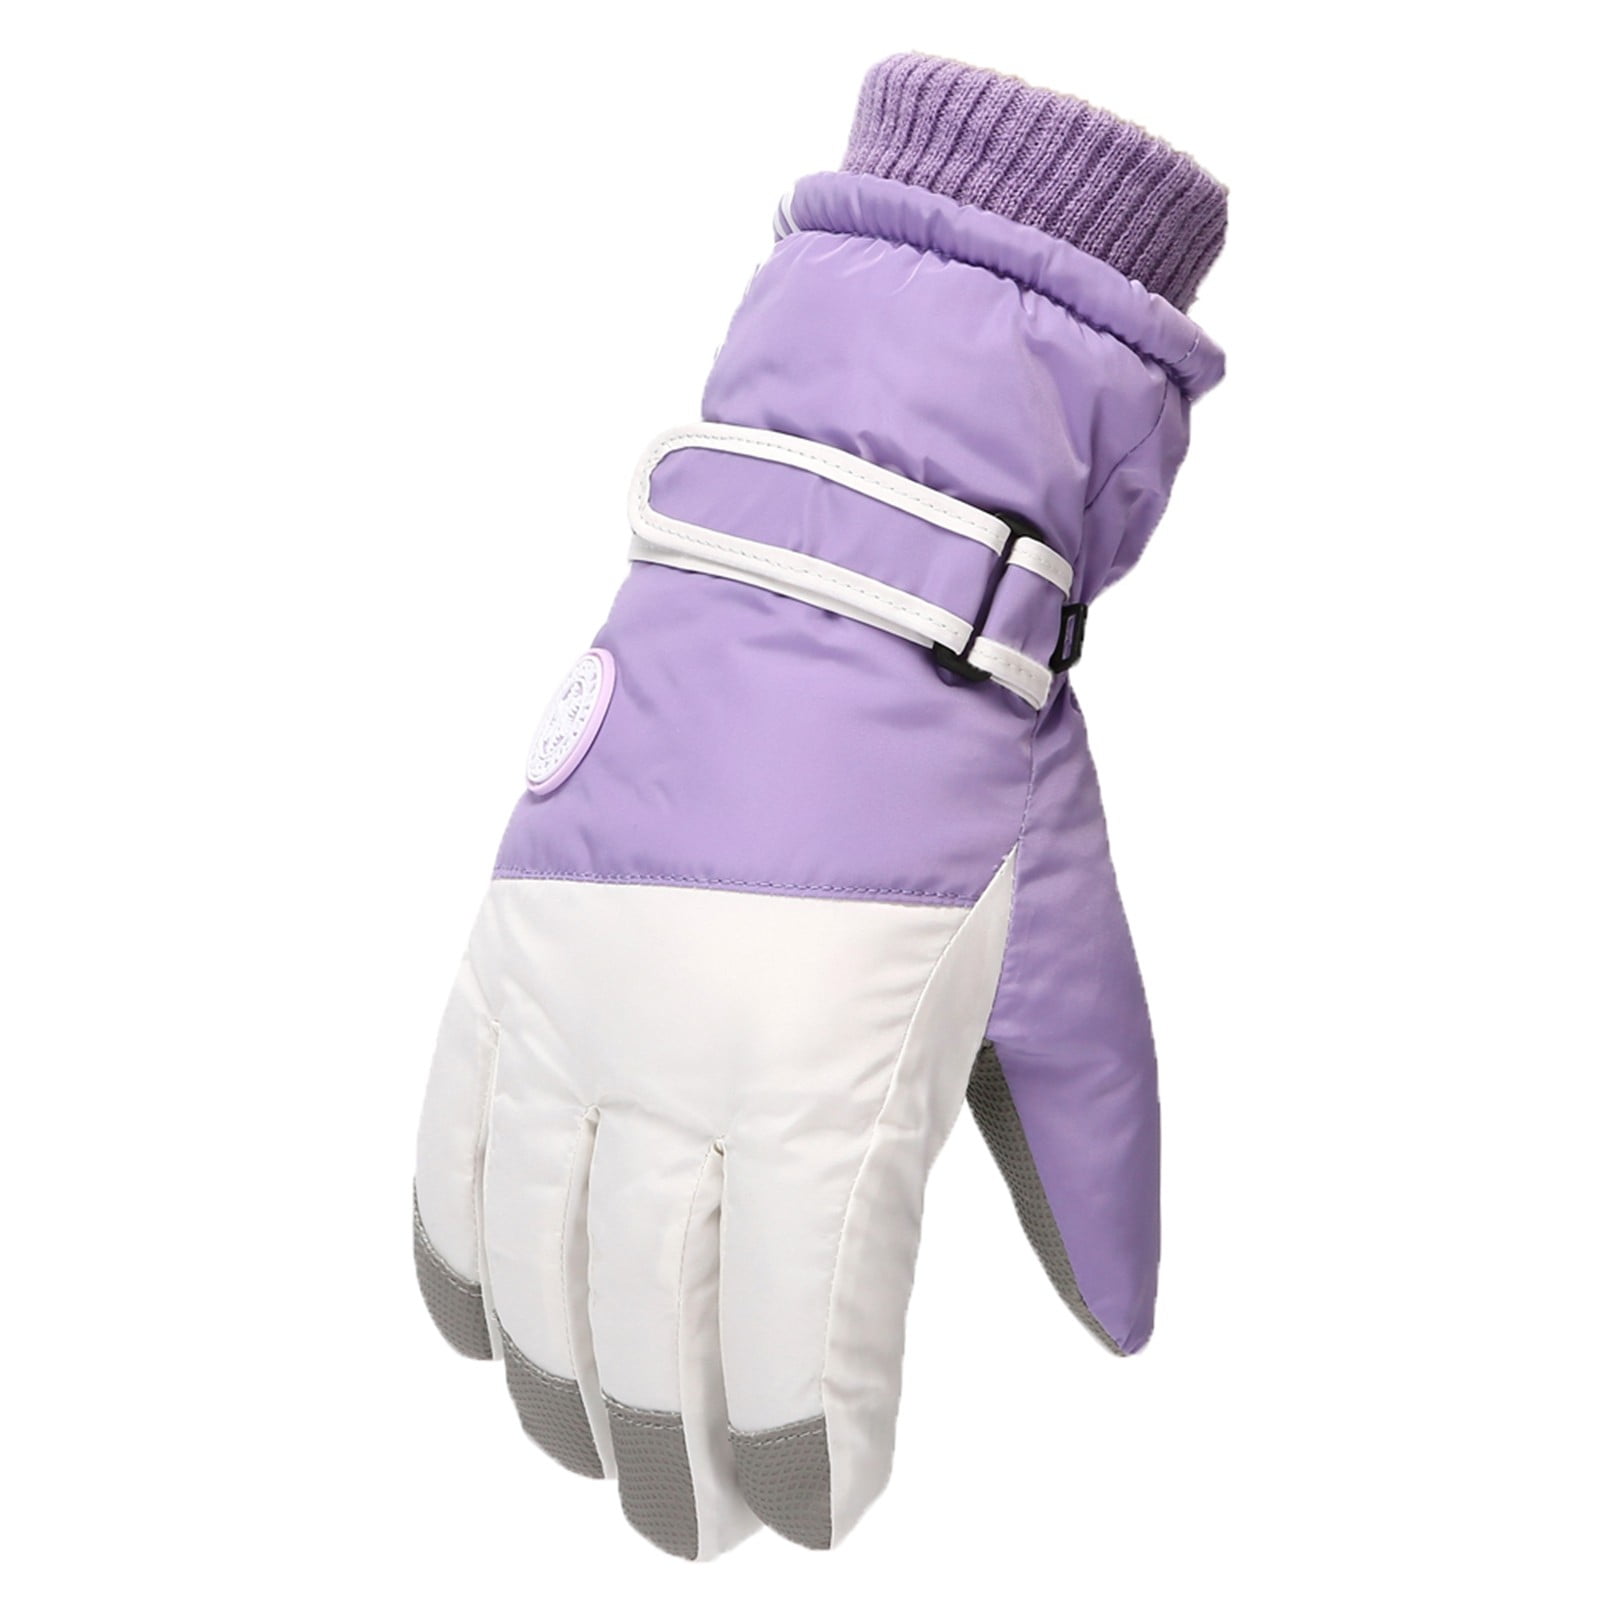 Gloves Mittens Toddler Adult Ski Gloves With Plush Winter Insulation ...